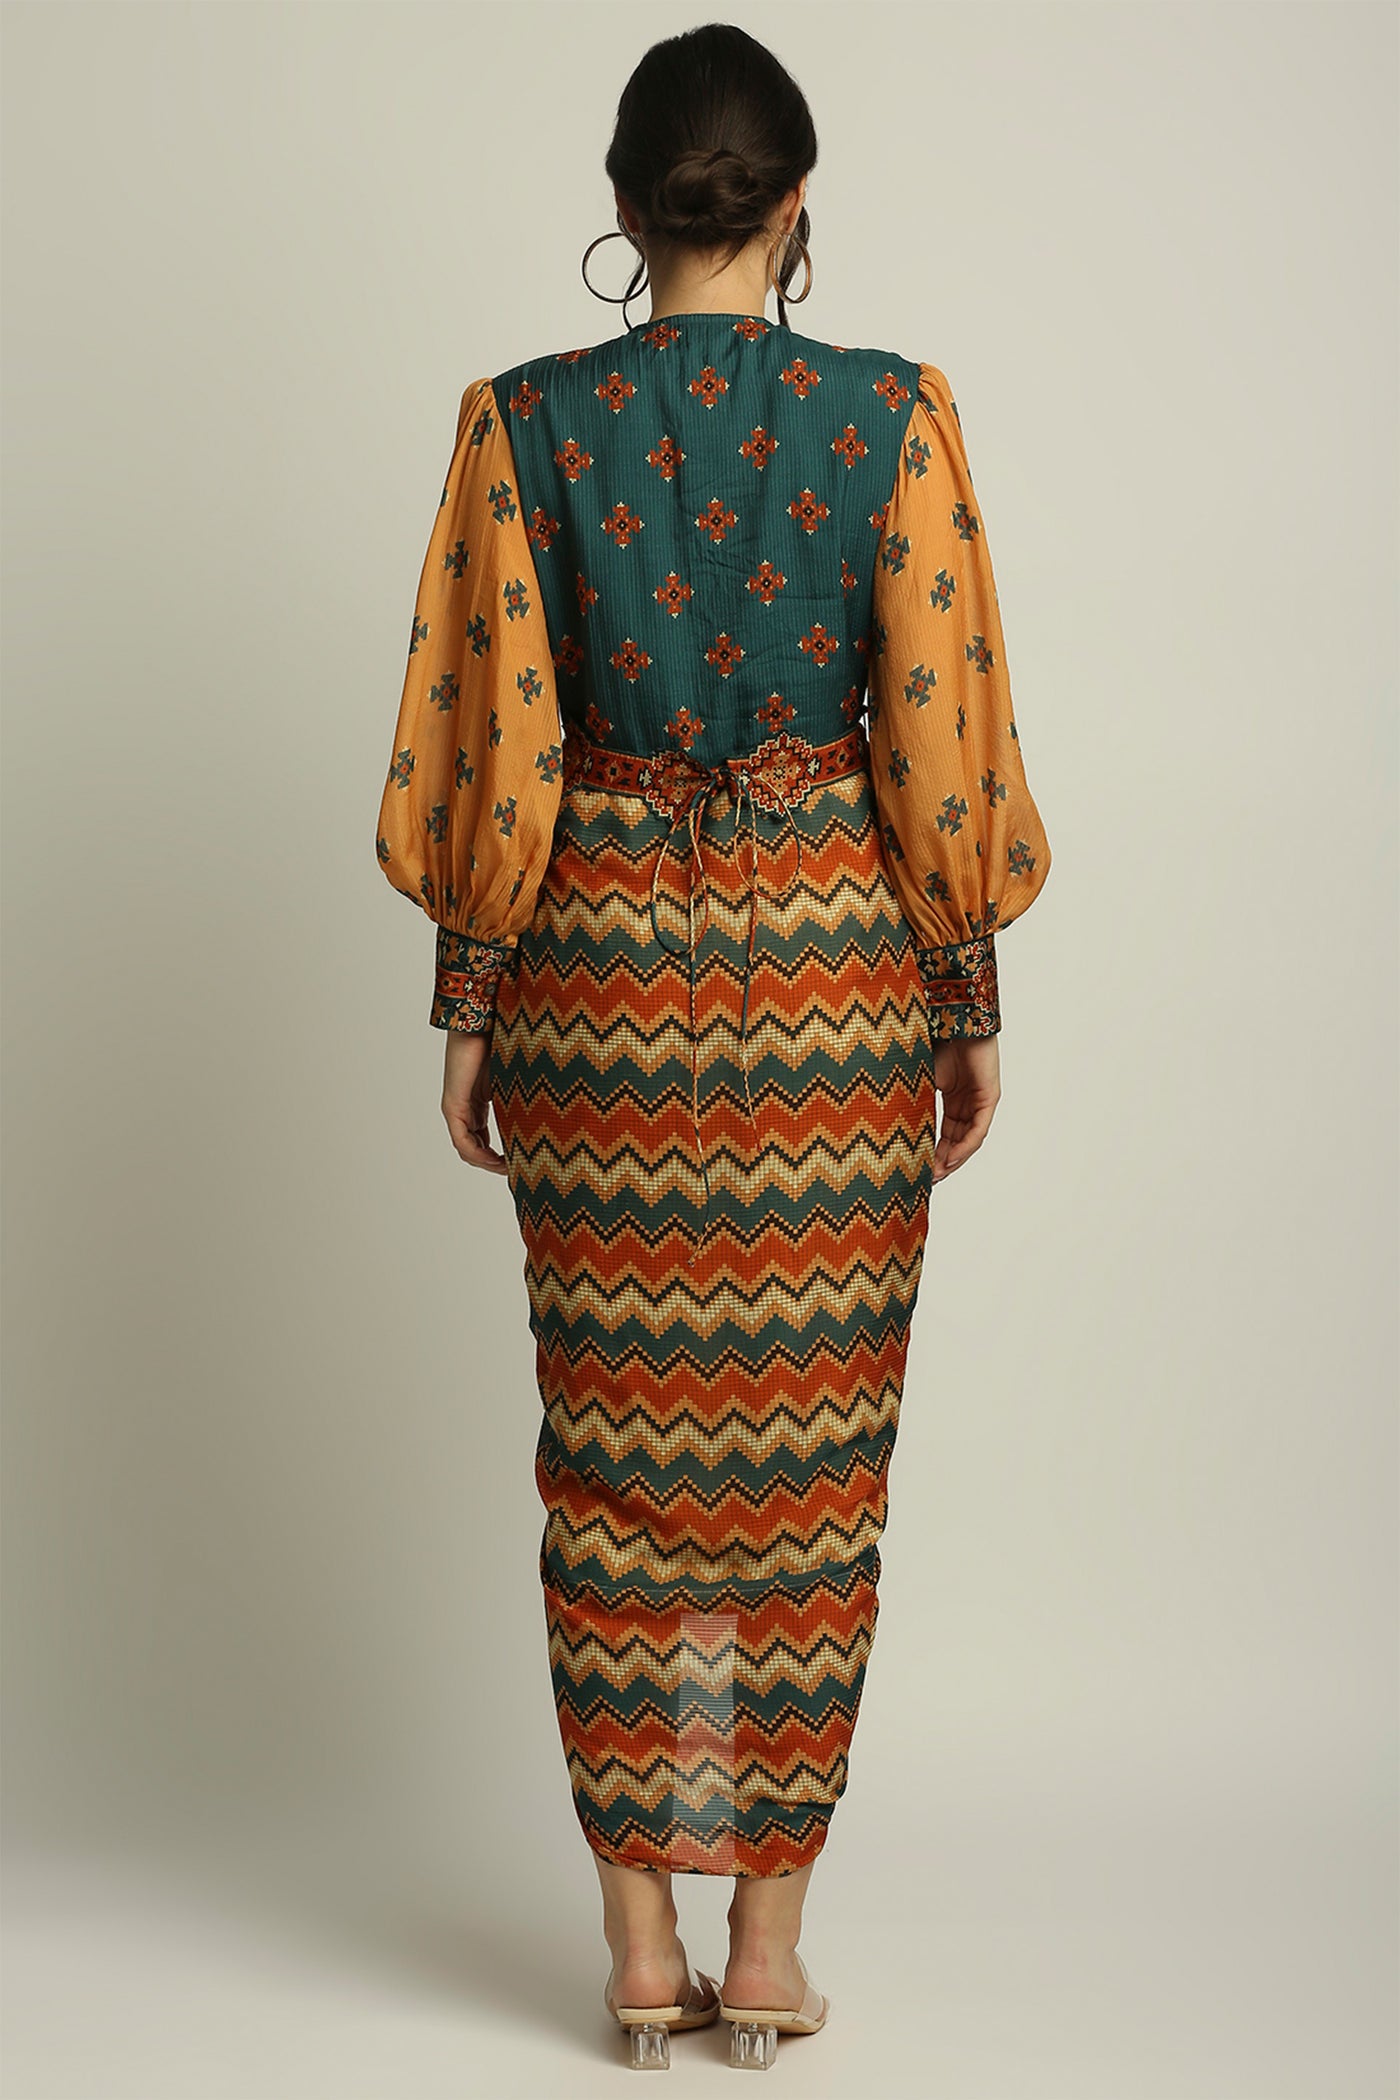 sougat paul Tiraz printed drape dress with belt orange green fusion indian designer wear online shopping melange singapore